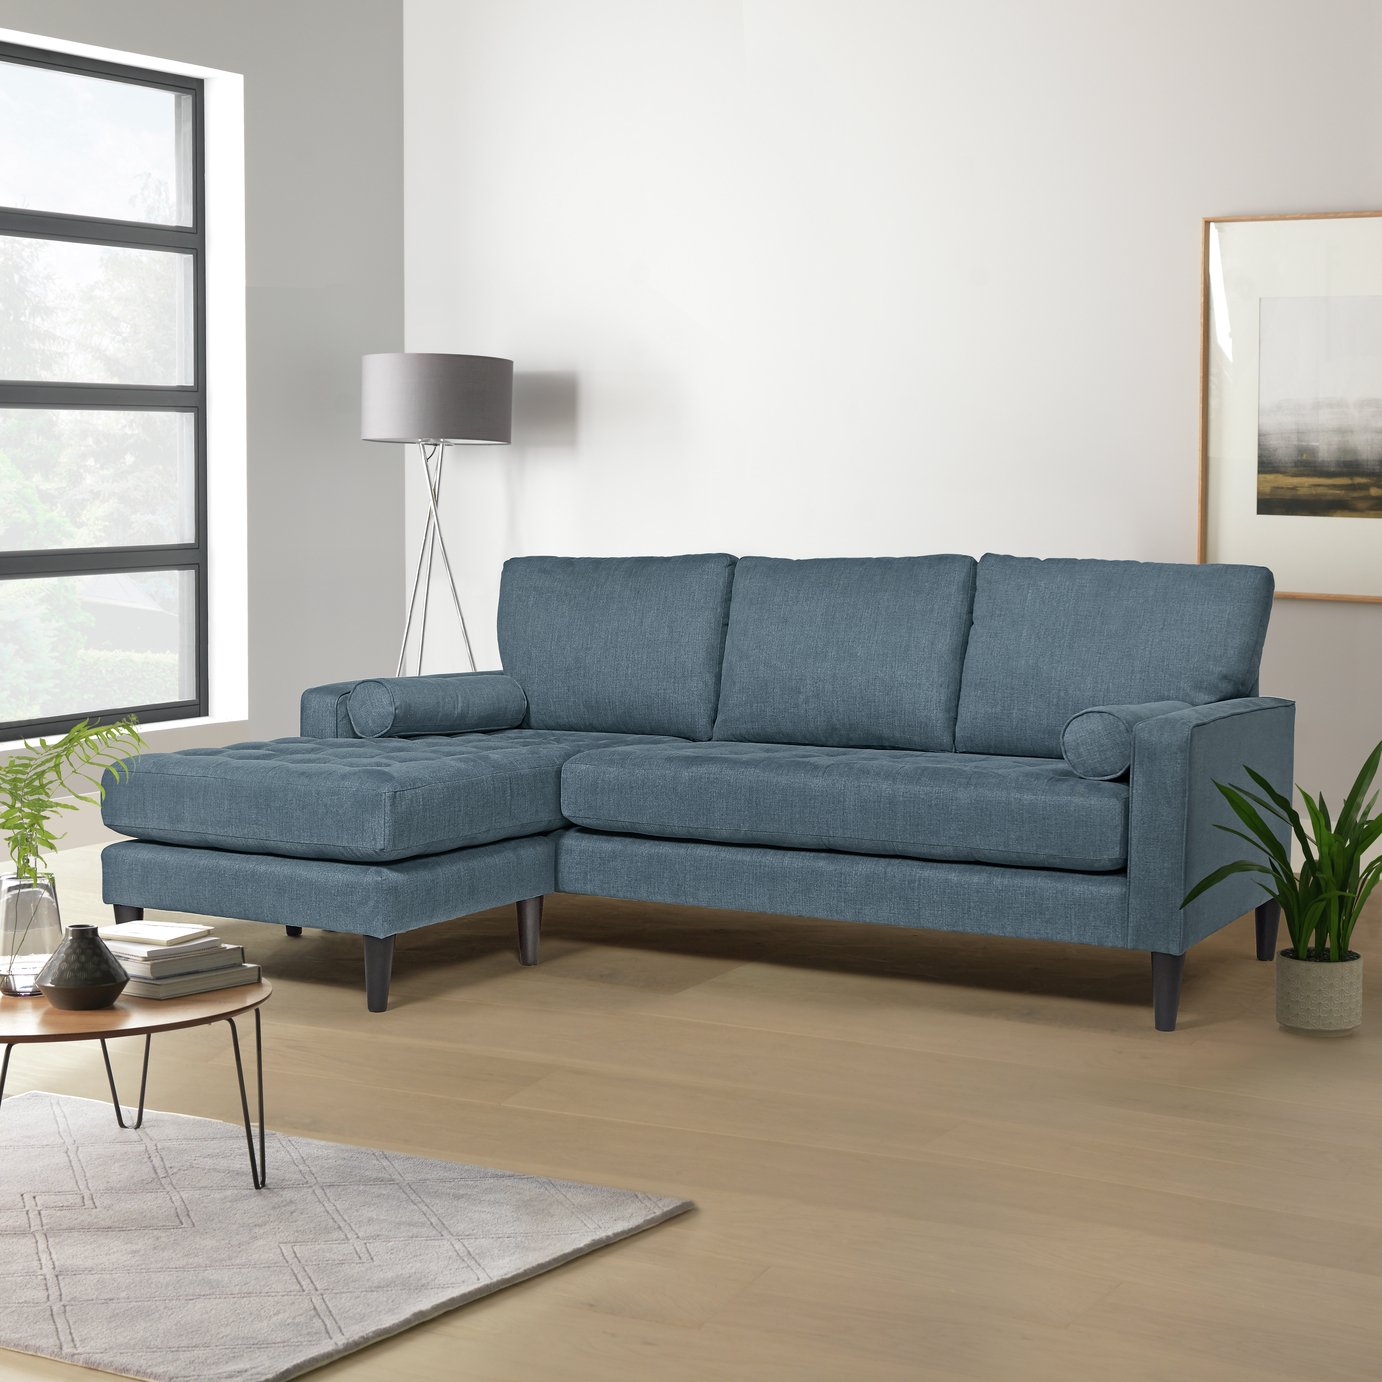 Argos Home Hudson Reversible Corner Fabric Sofa Review